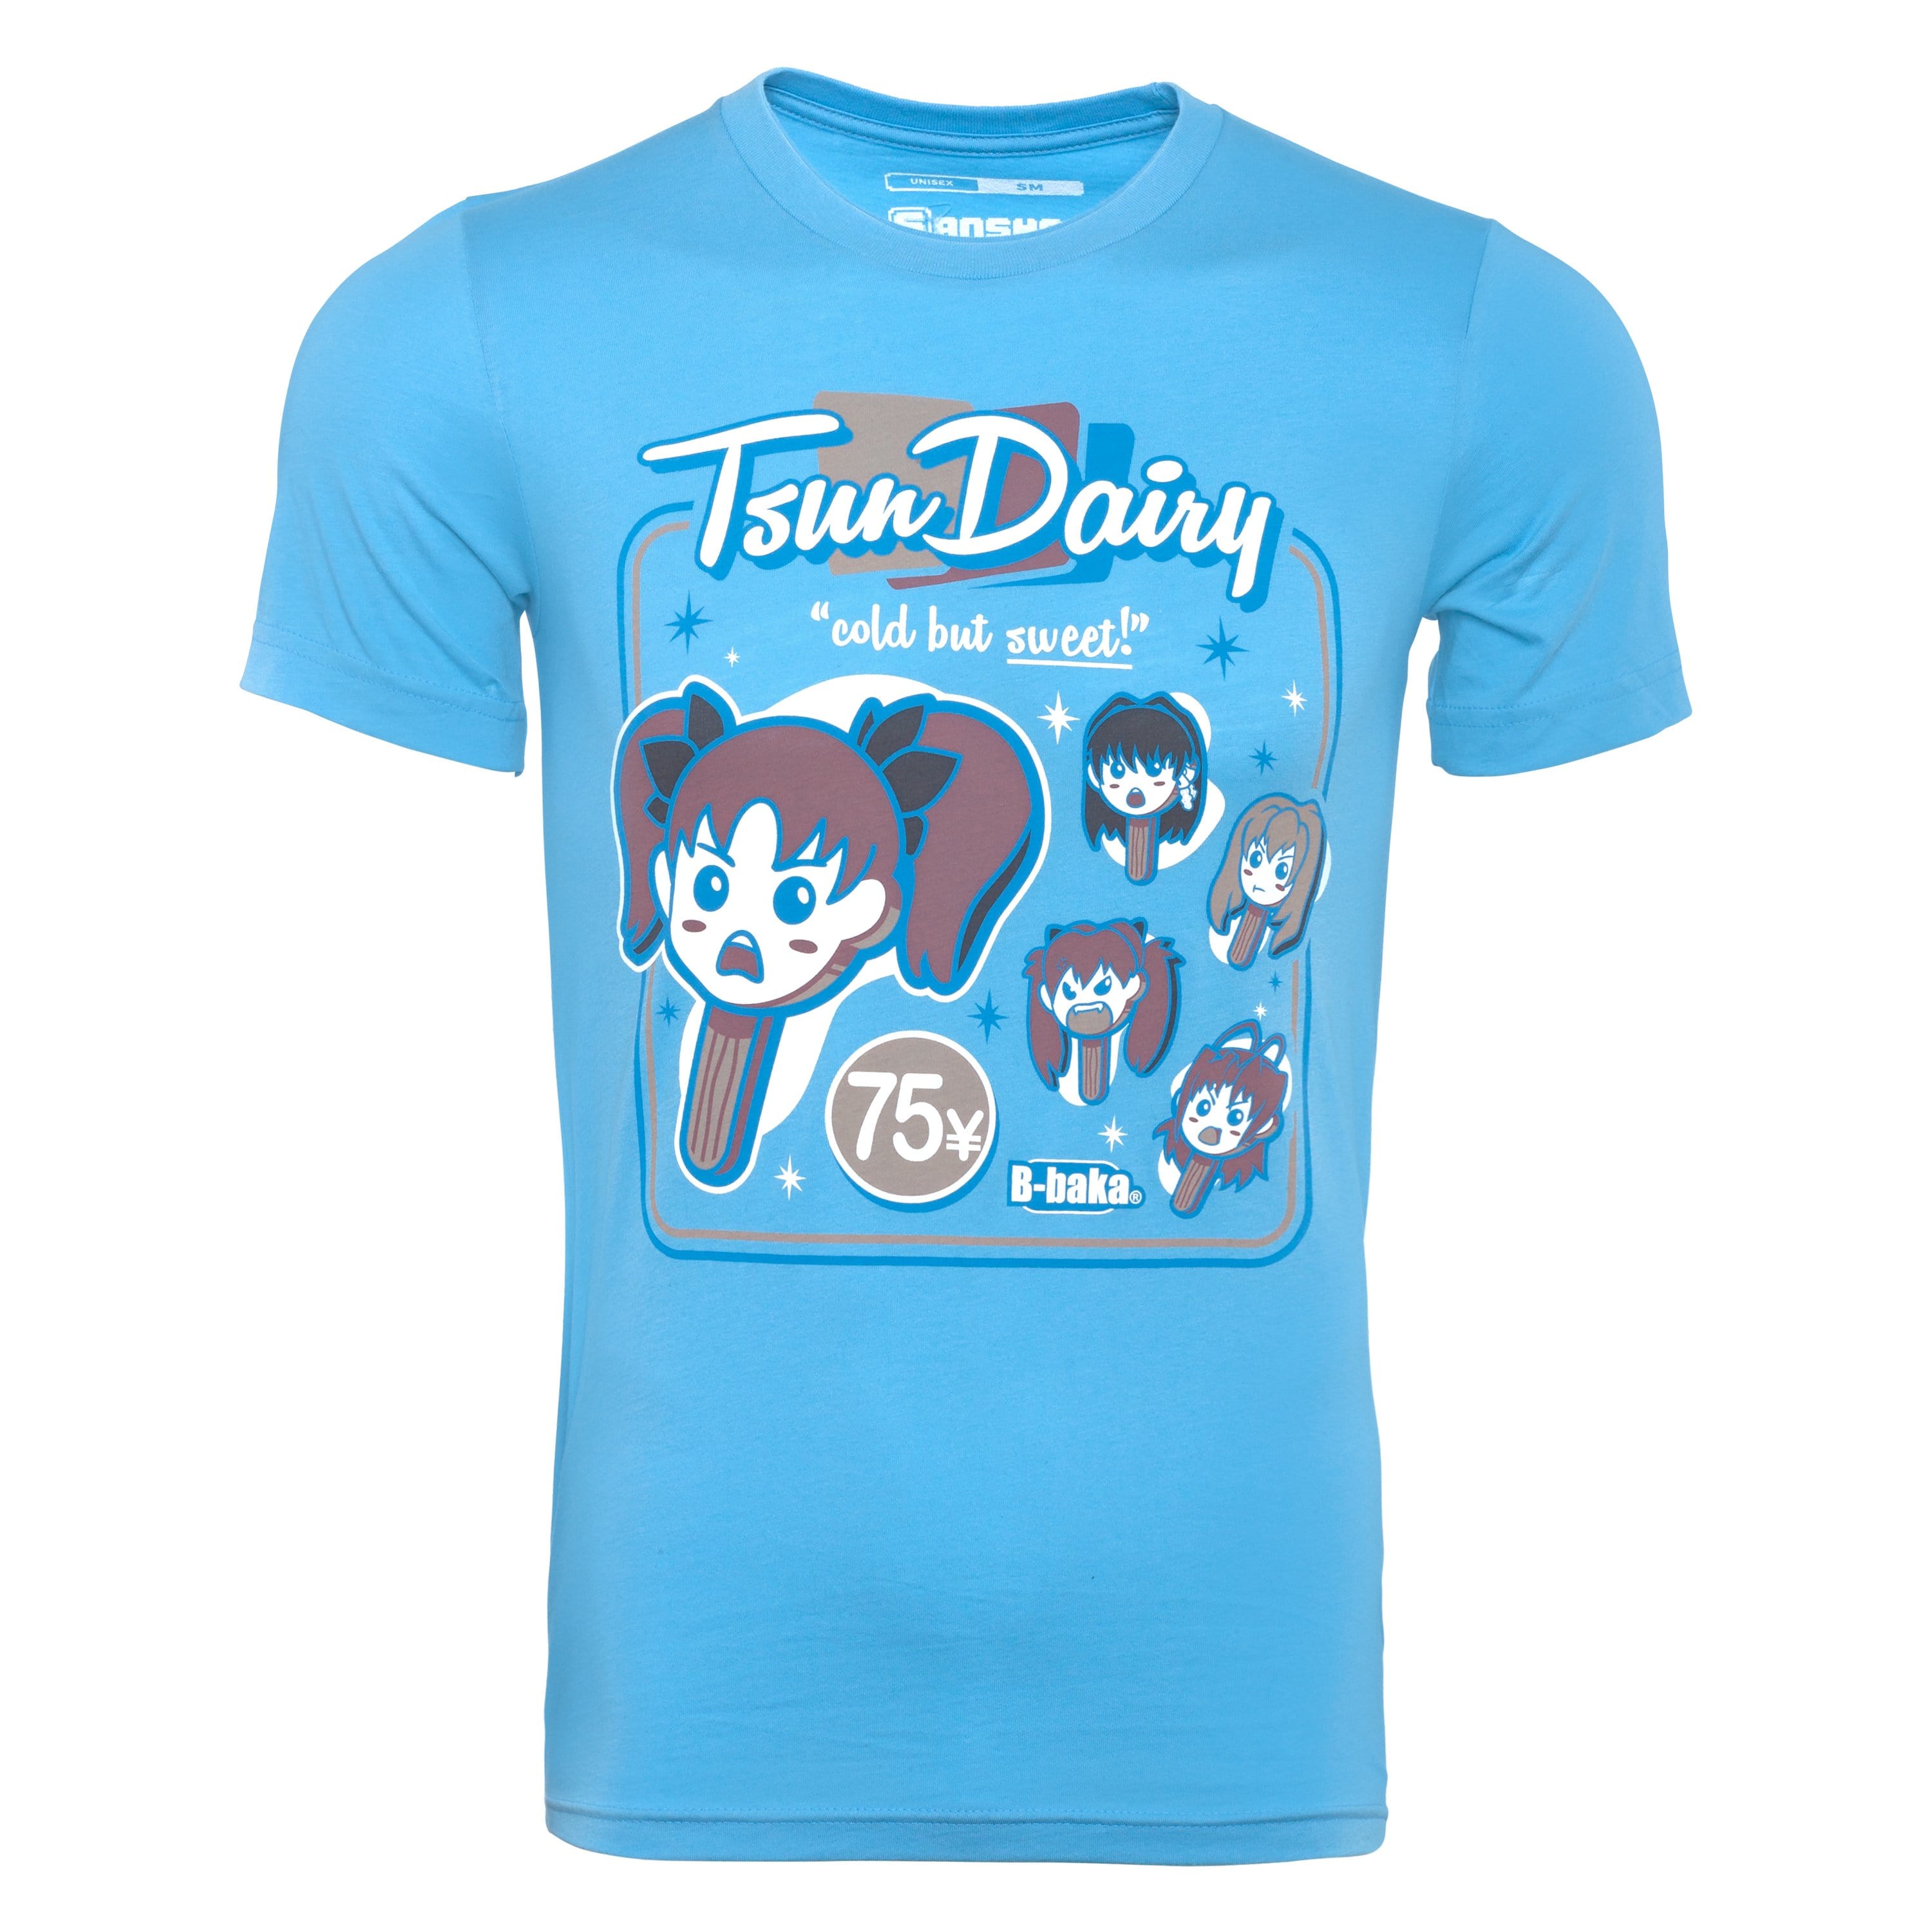 Sanshee - Tsun-Dairy 100% Cotton T-shirt